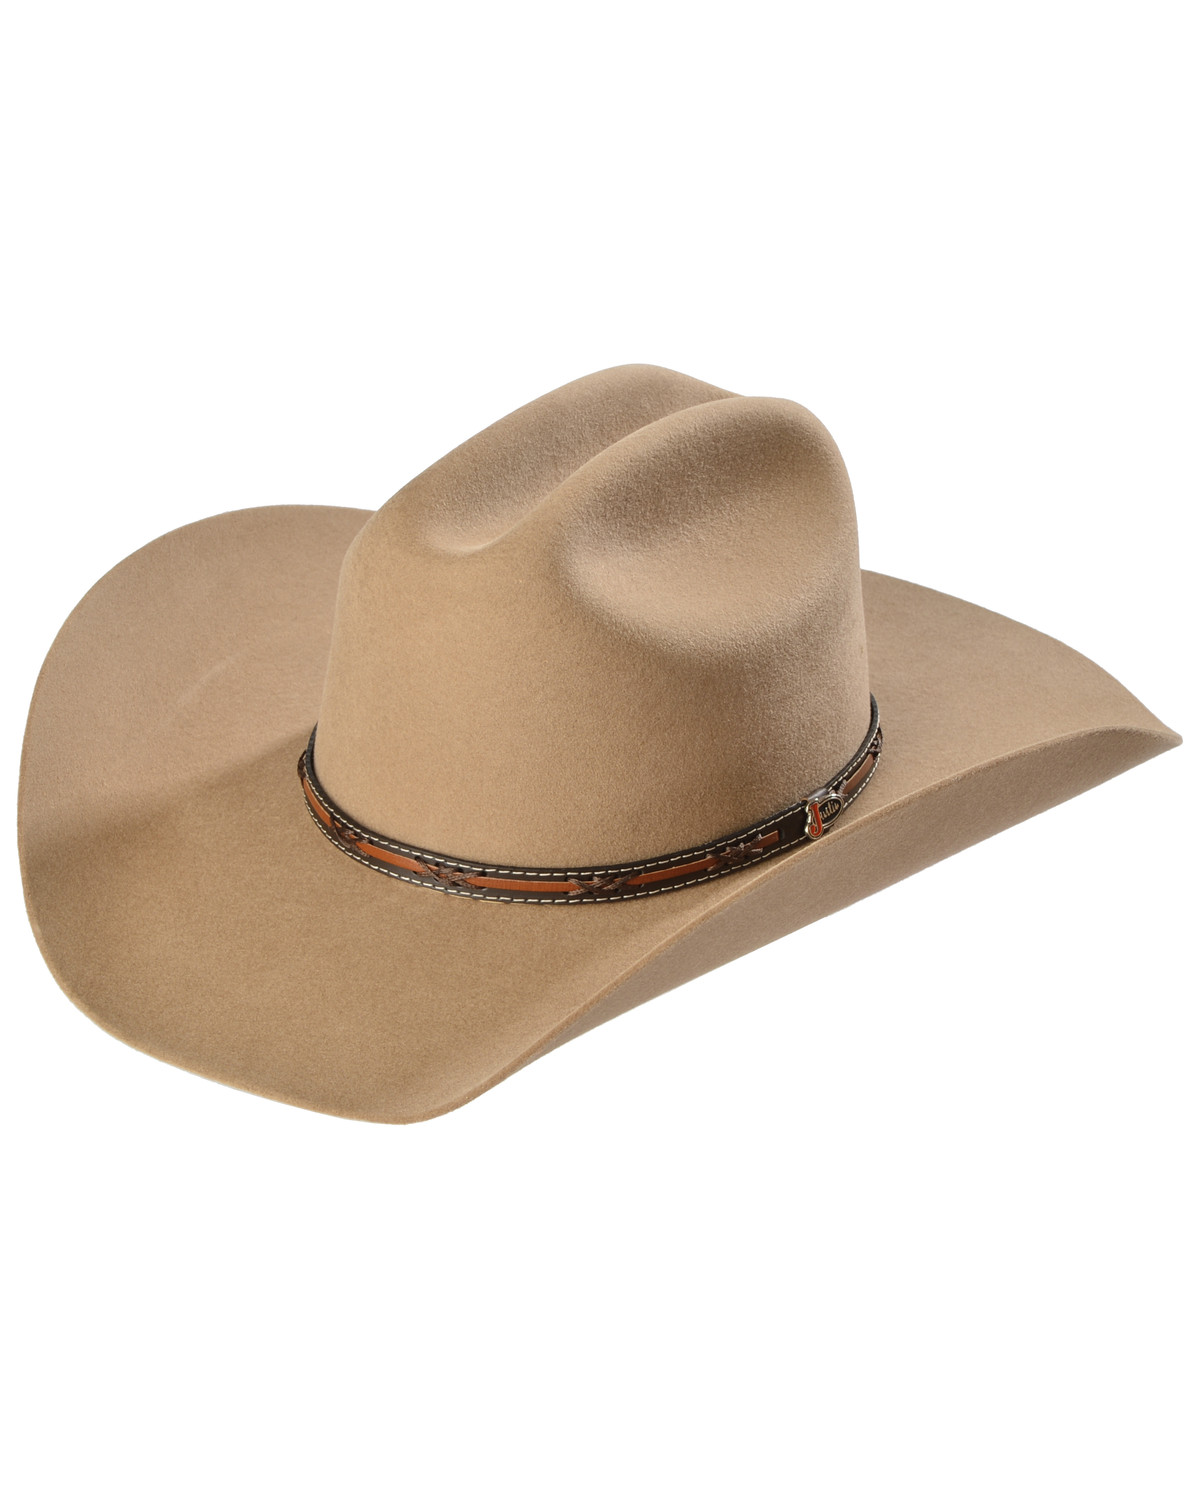 Wool Felt Cowboy Hats